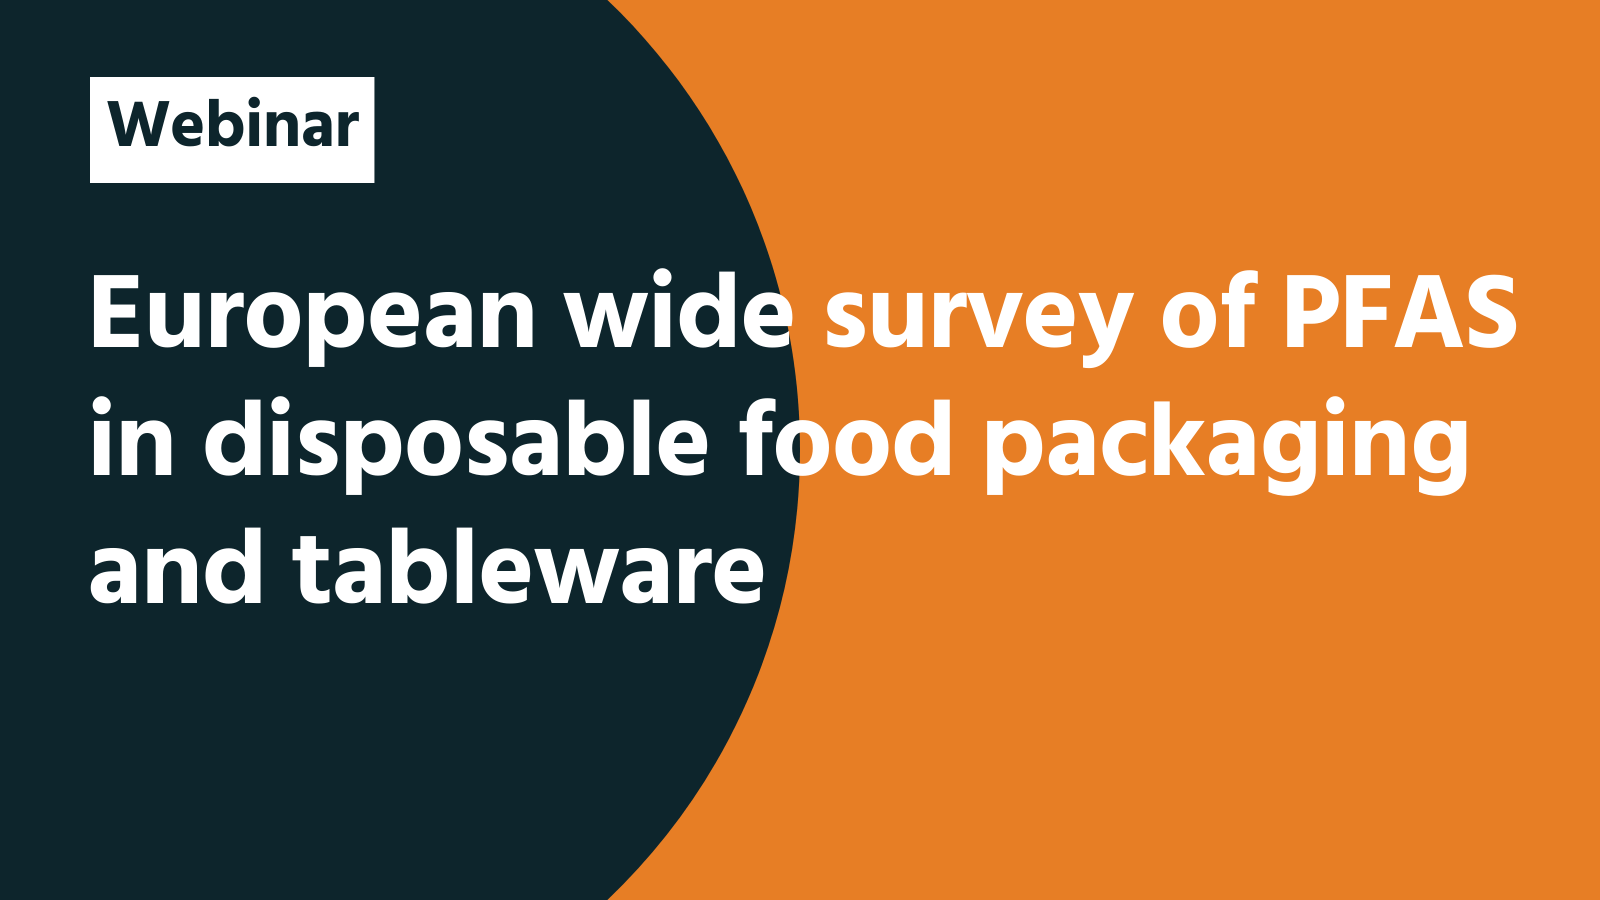 Webinar: European wide survey of PFAS in disposable food packaging and tableware